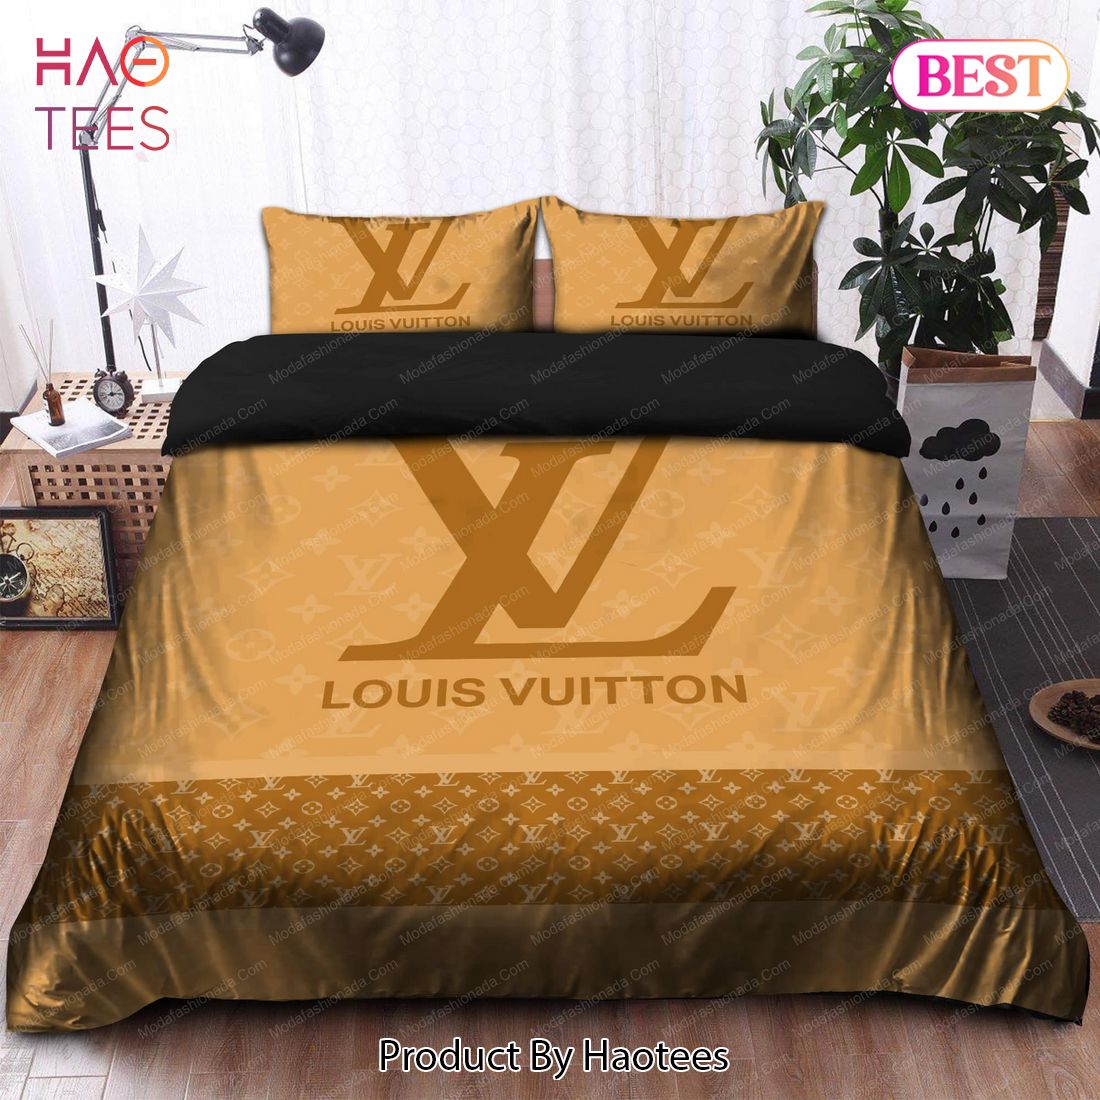 Golden Louis Vuitton luxury bedding set